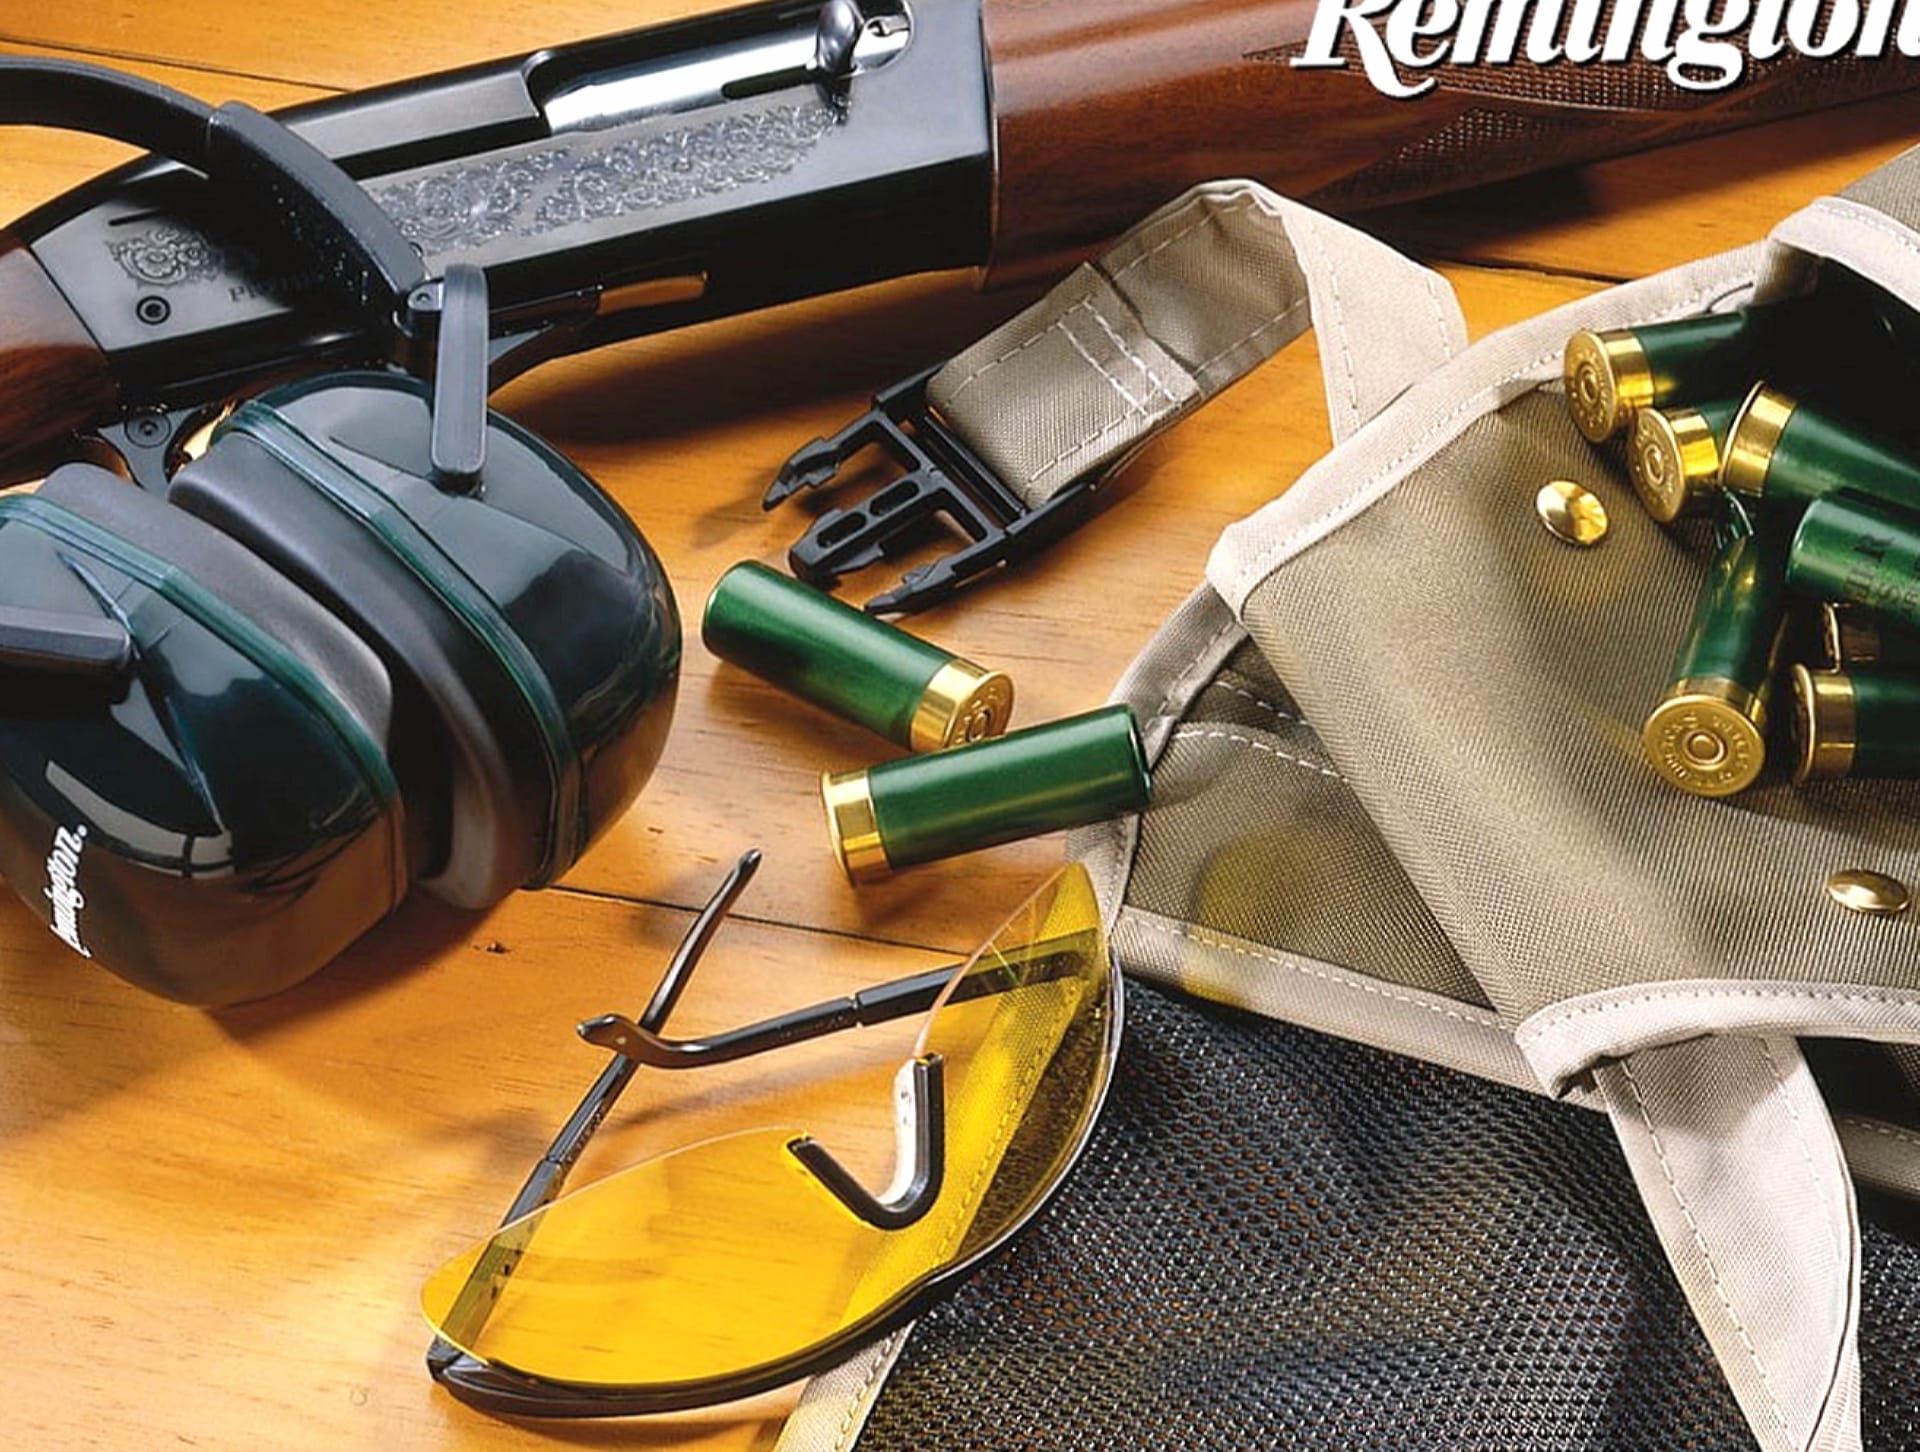 Remington Shotgun at 1024 x 1024 iPad size wallpapers HD quality